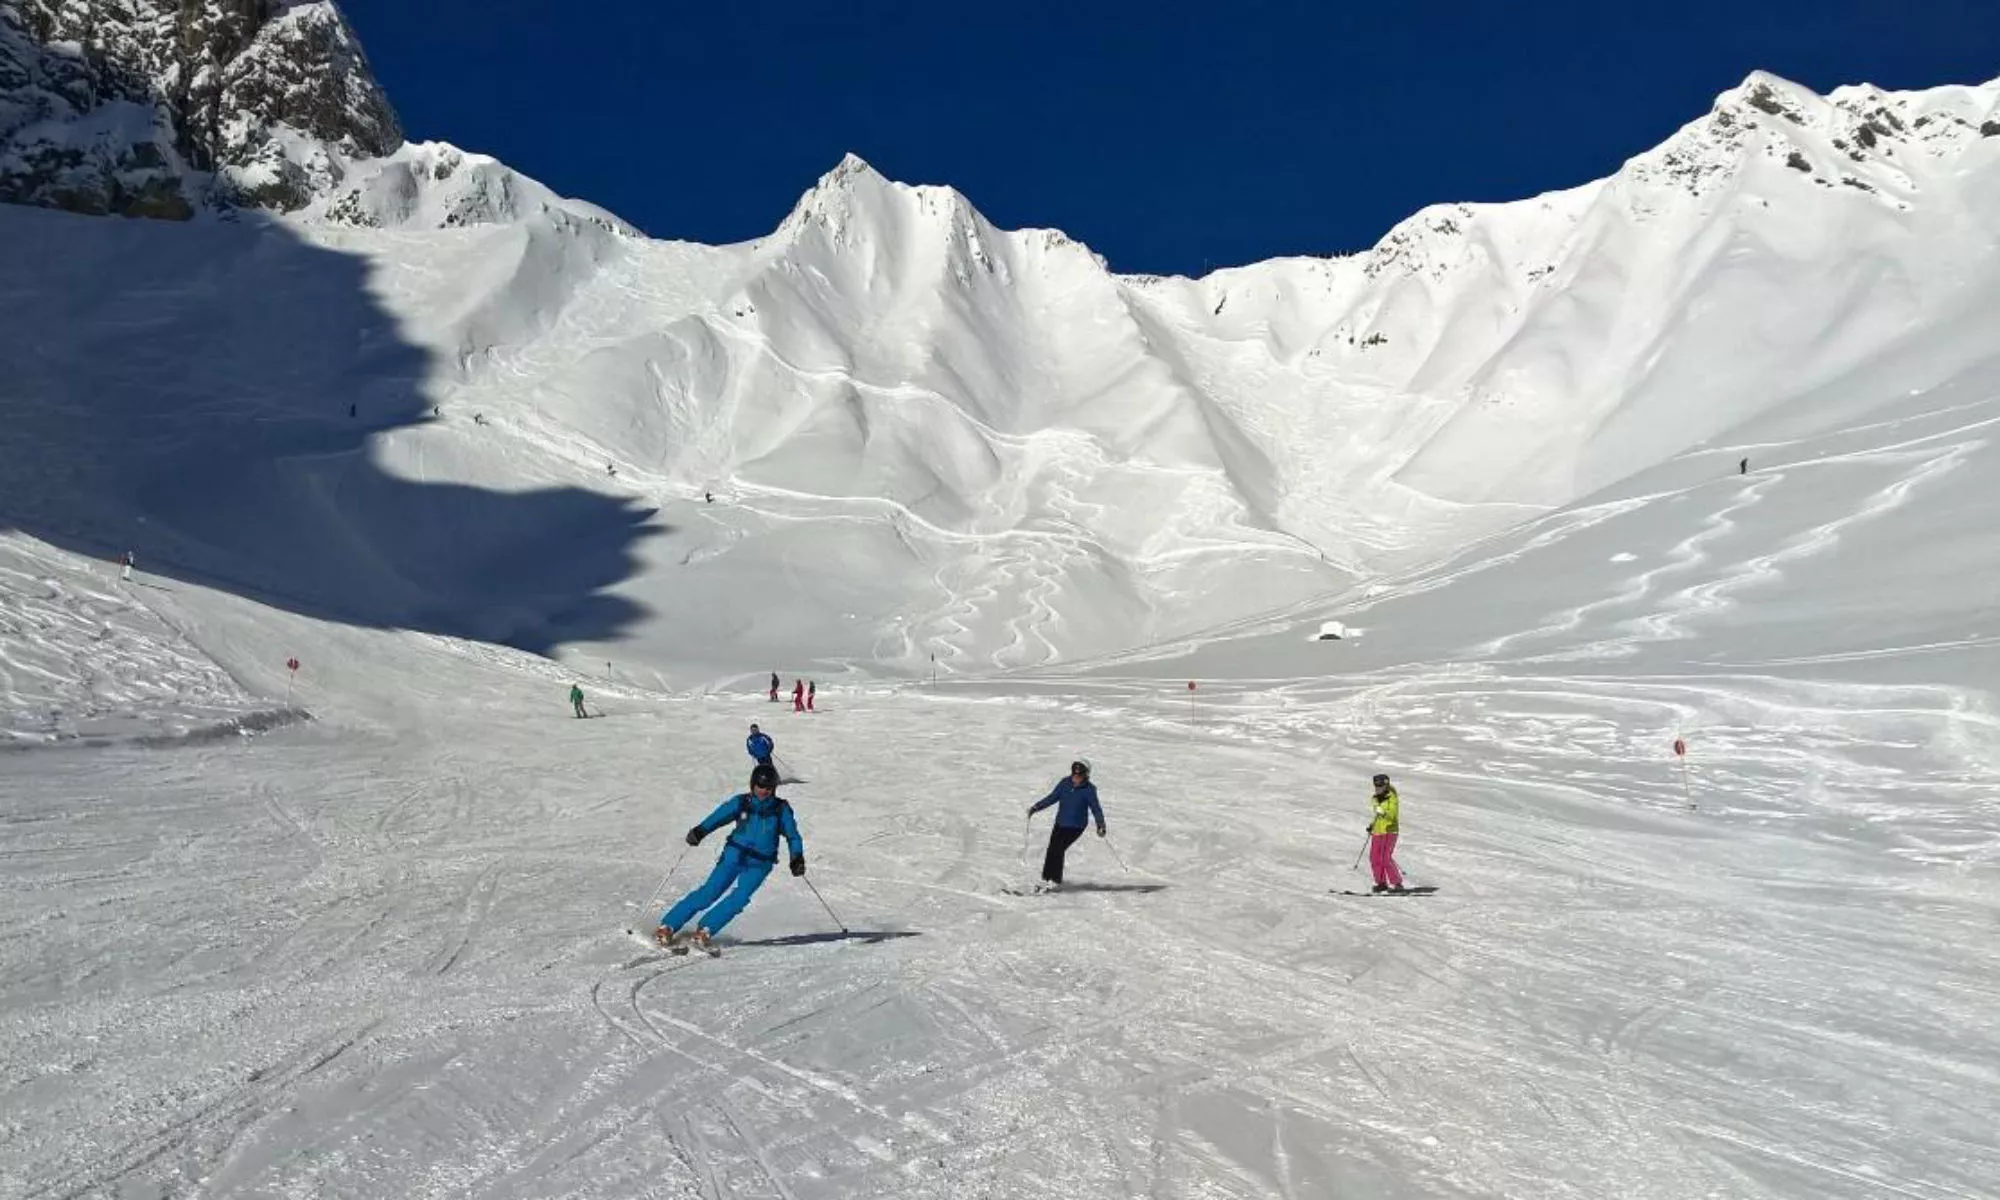 Ski Tale in Slovakia, Europe | Snowboarding,Mountaineering,Skiing - Rated 4